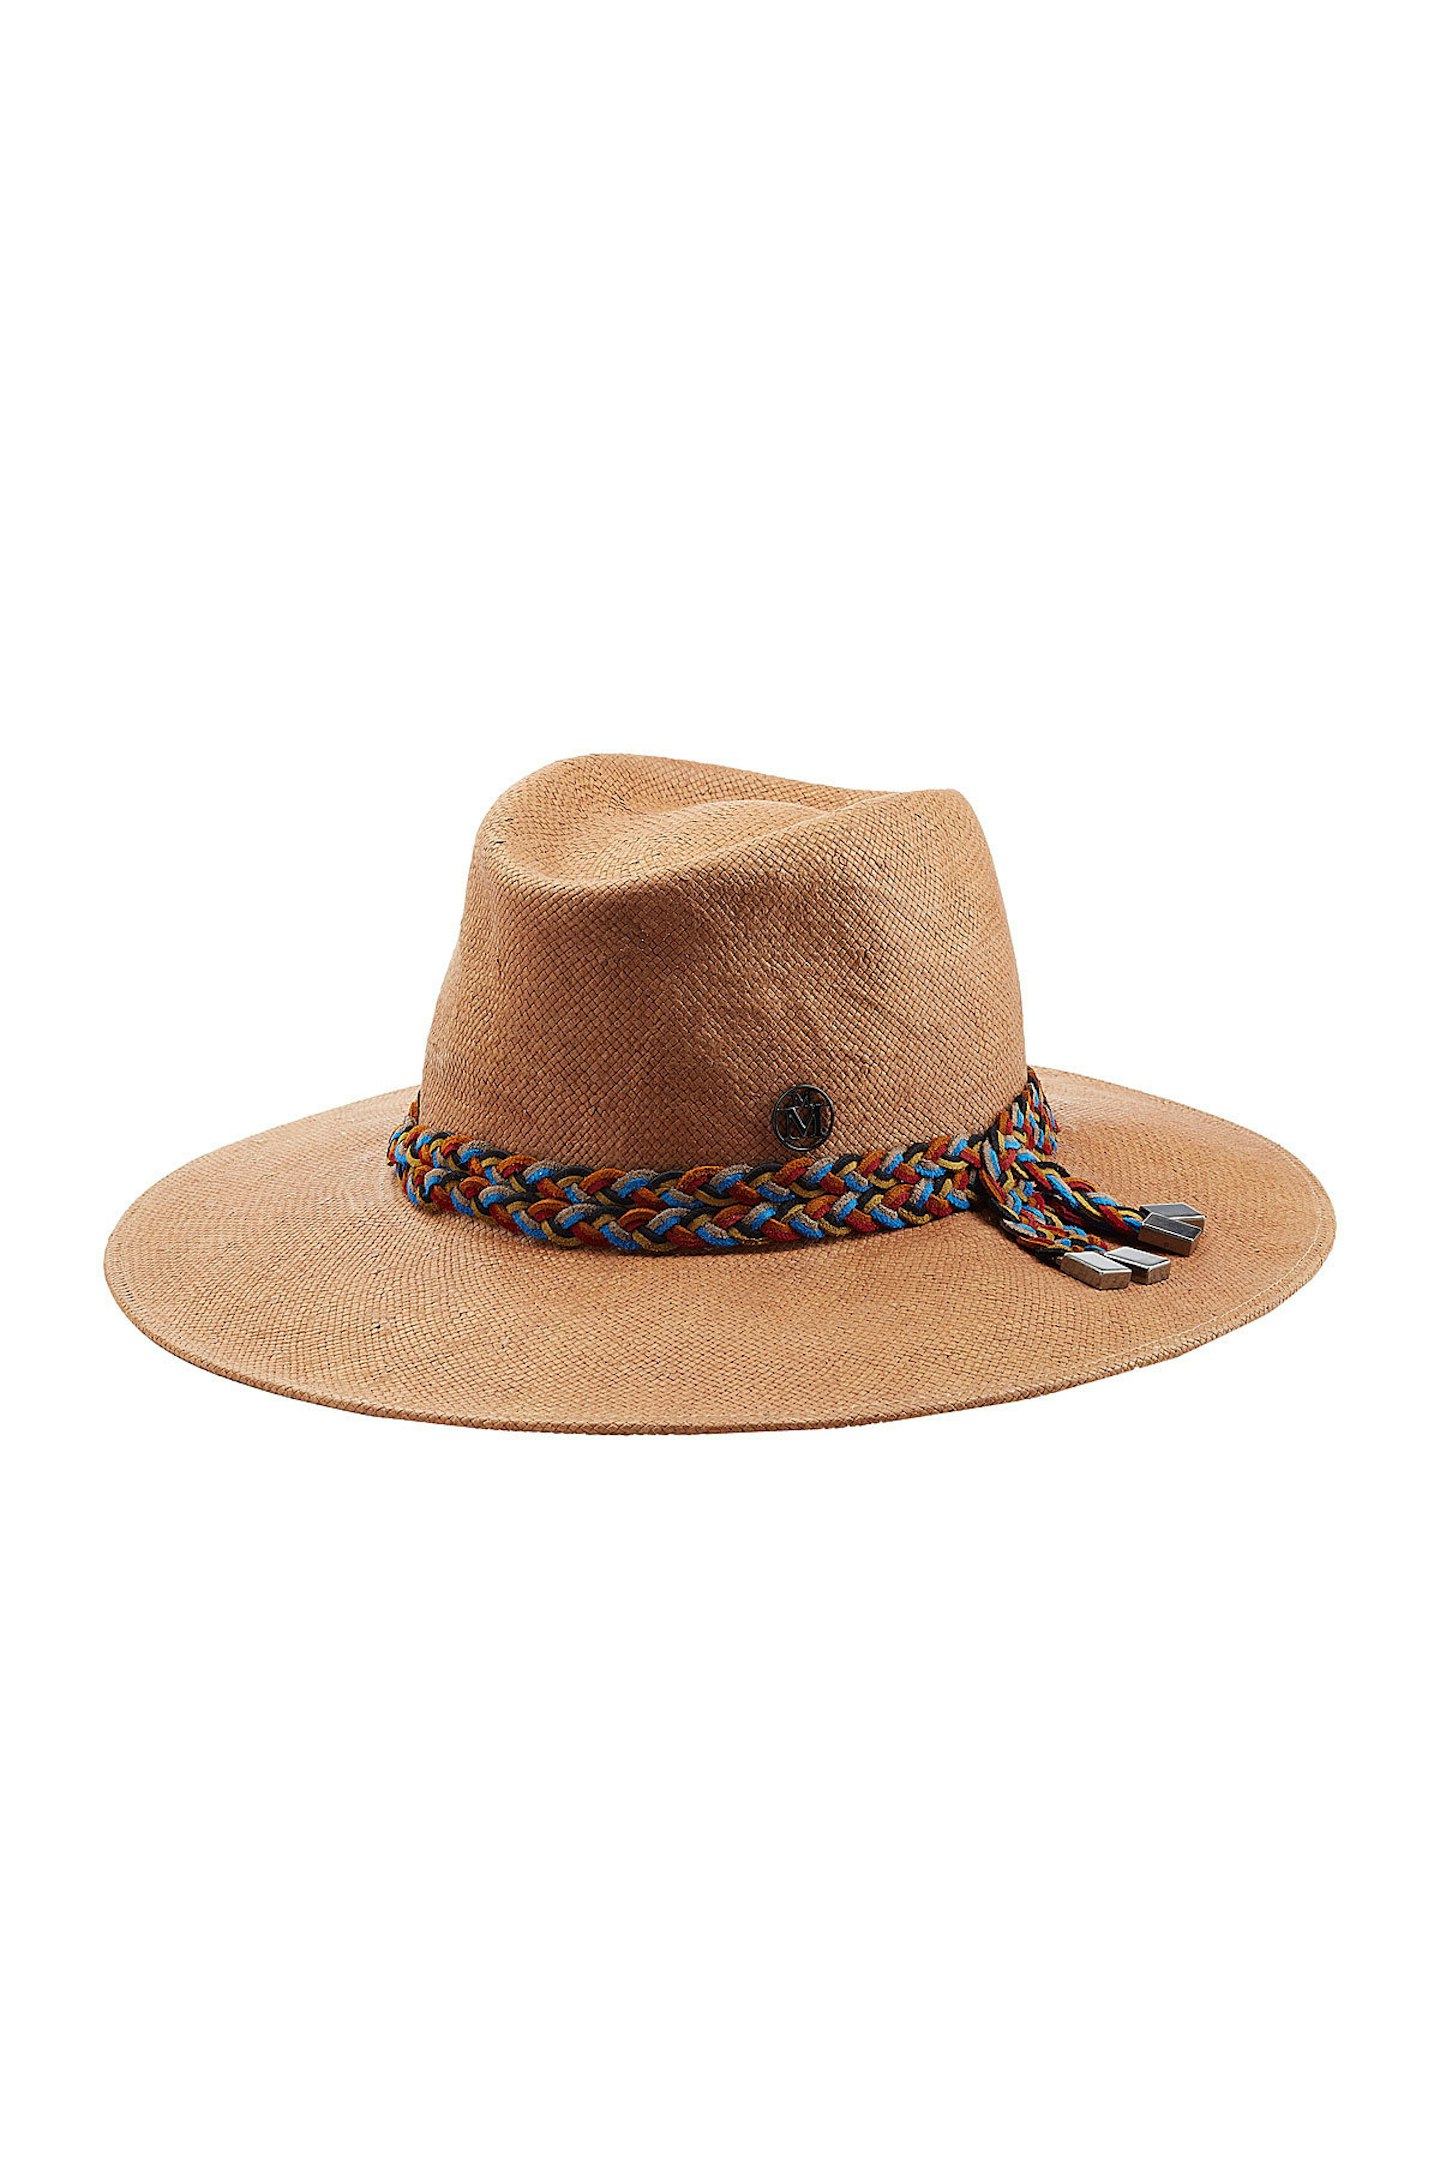 straw-hat-fashion-trend